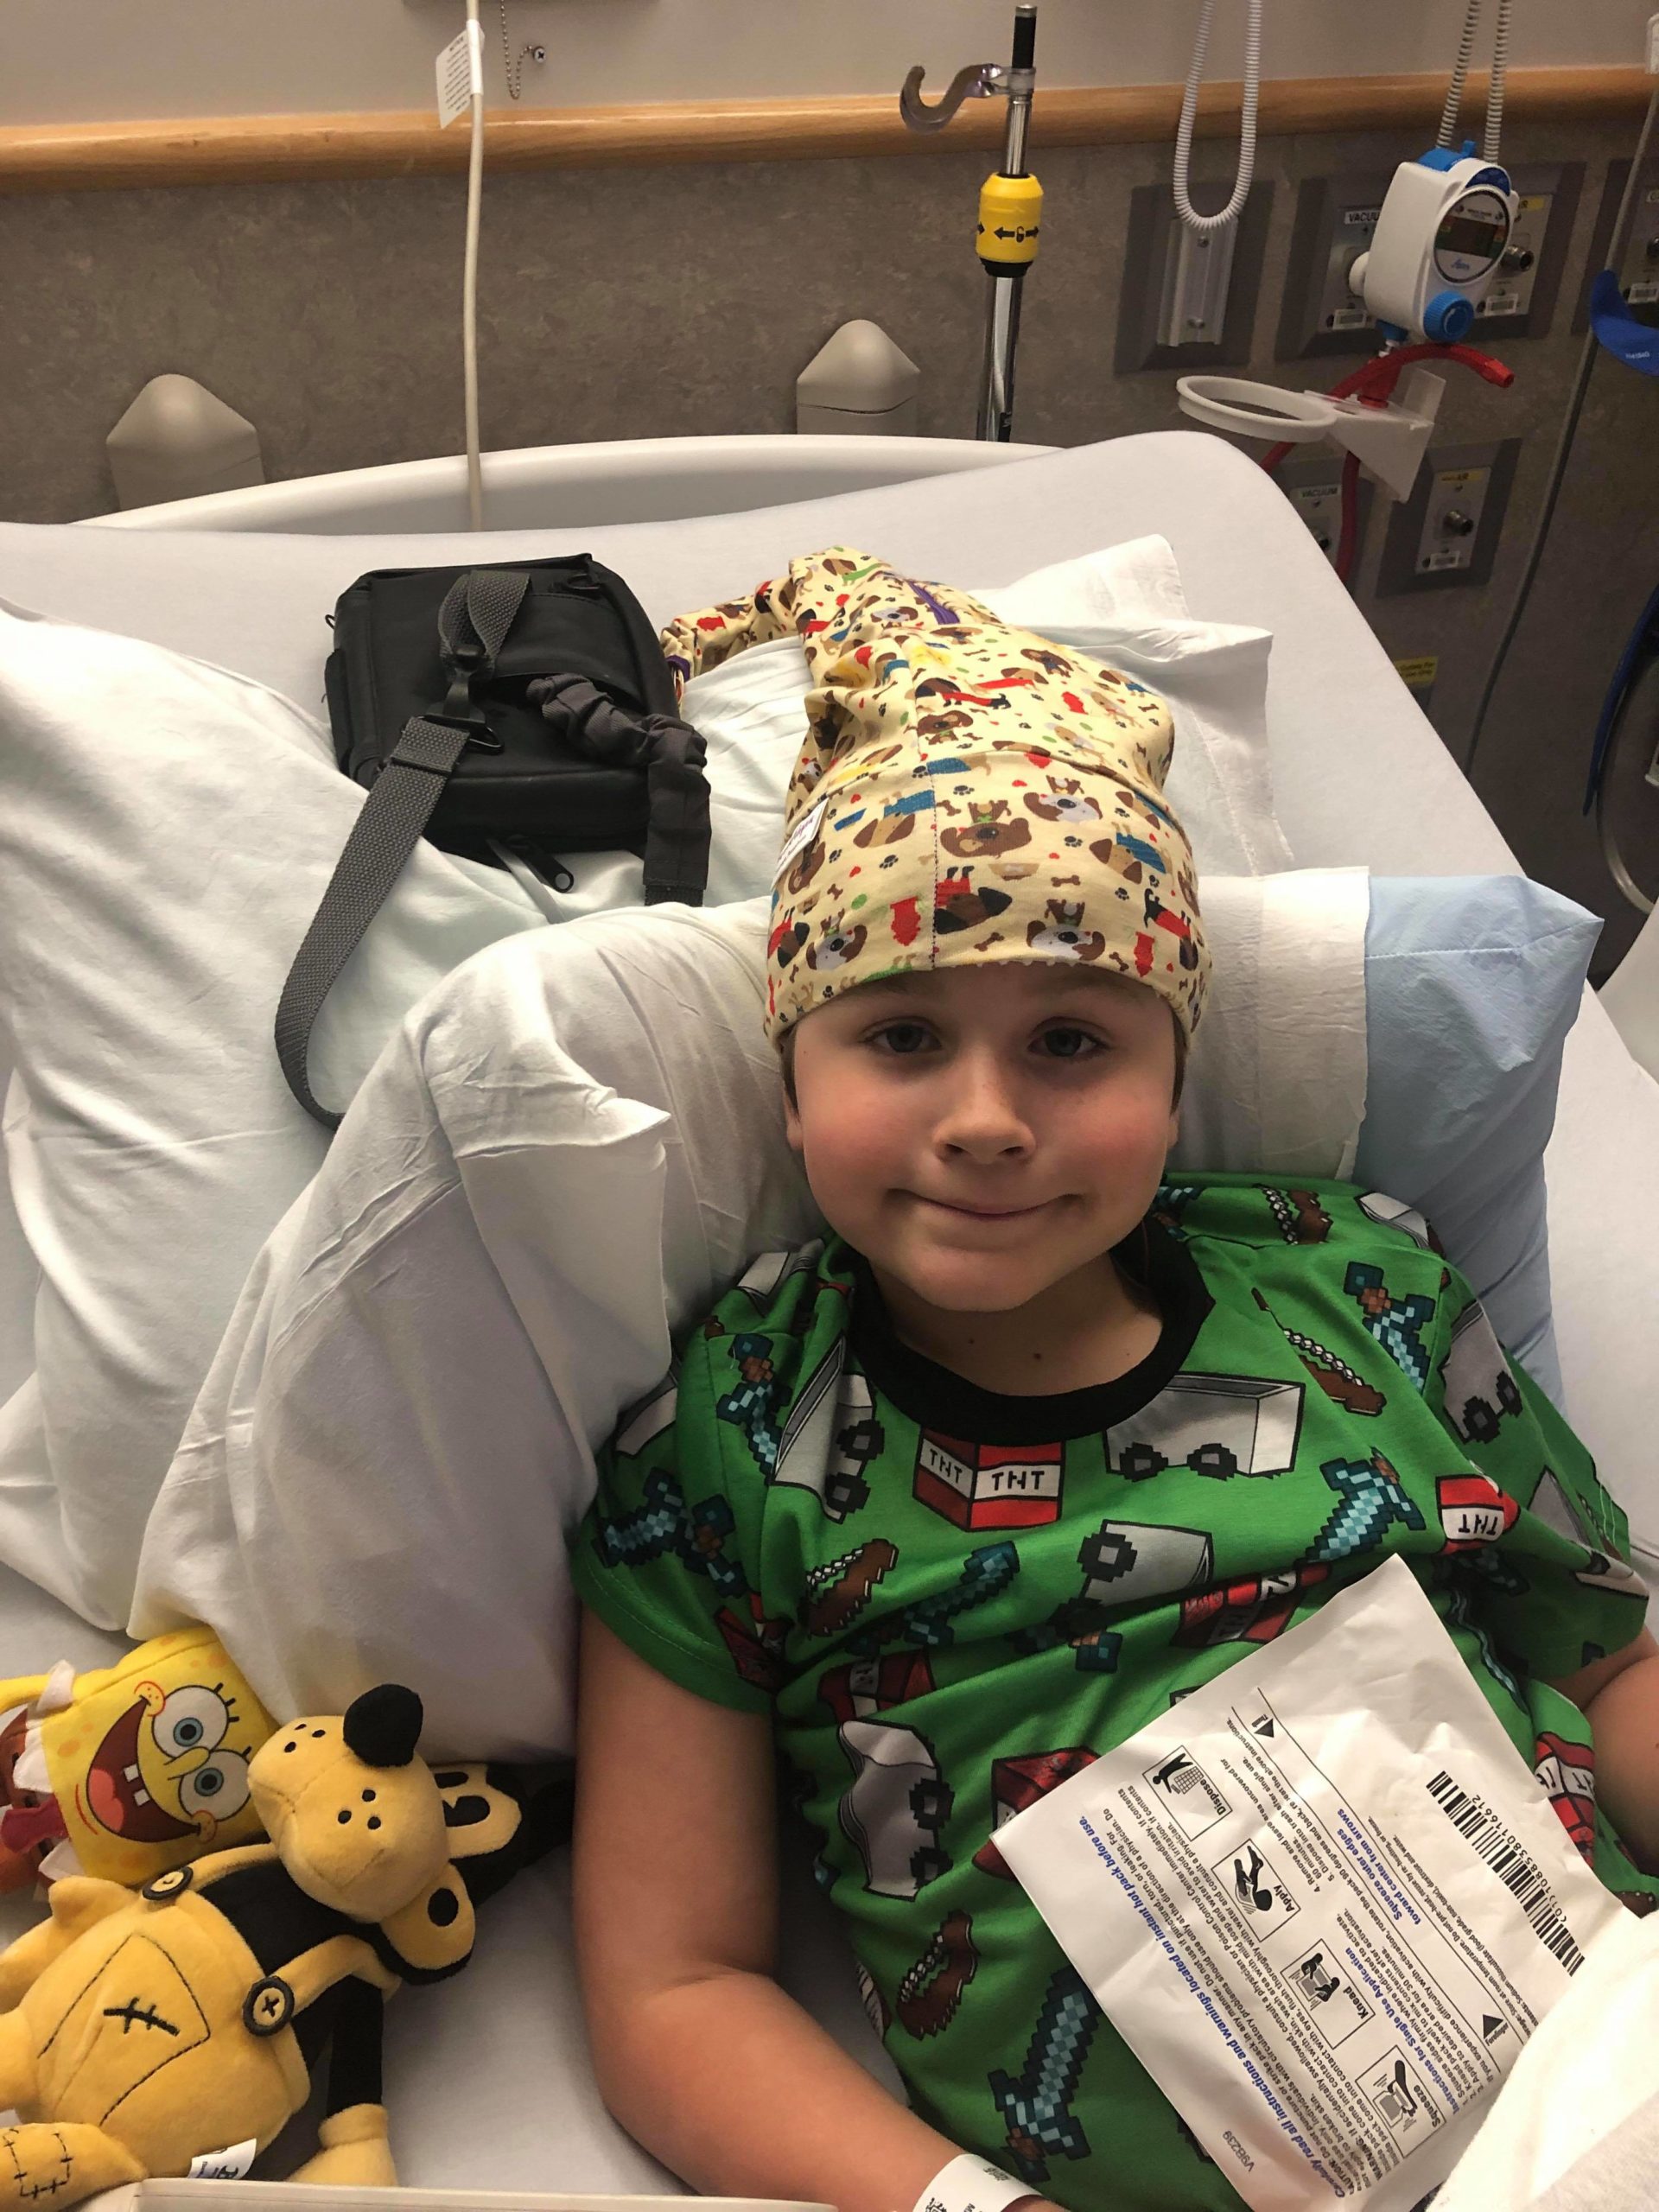 After receiving his Hannahtopia NillyNoggin EEG Cap